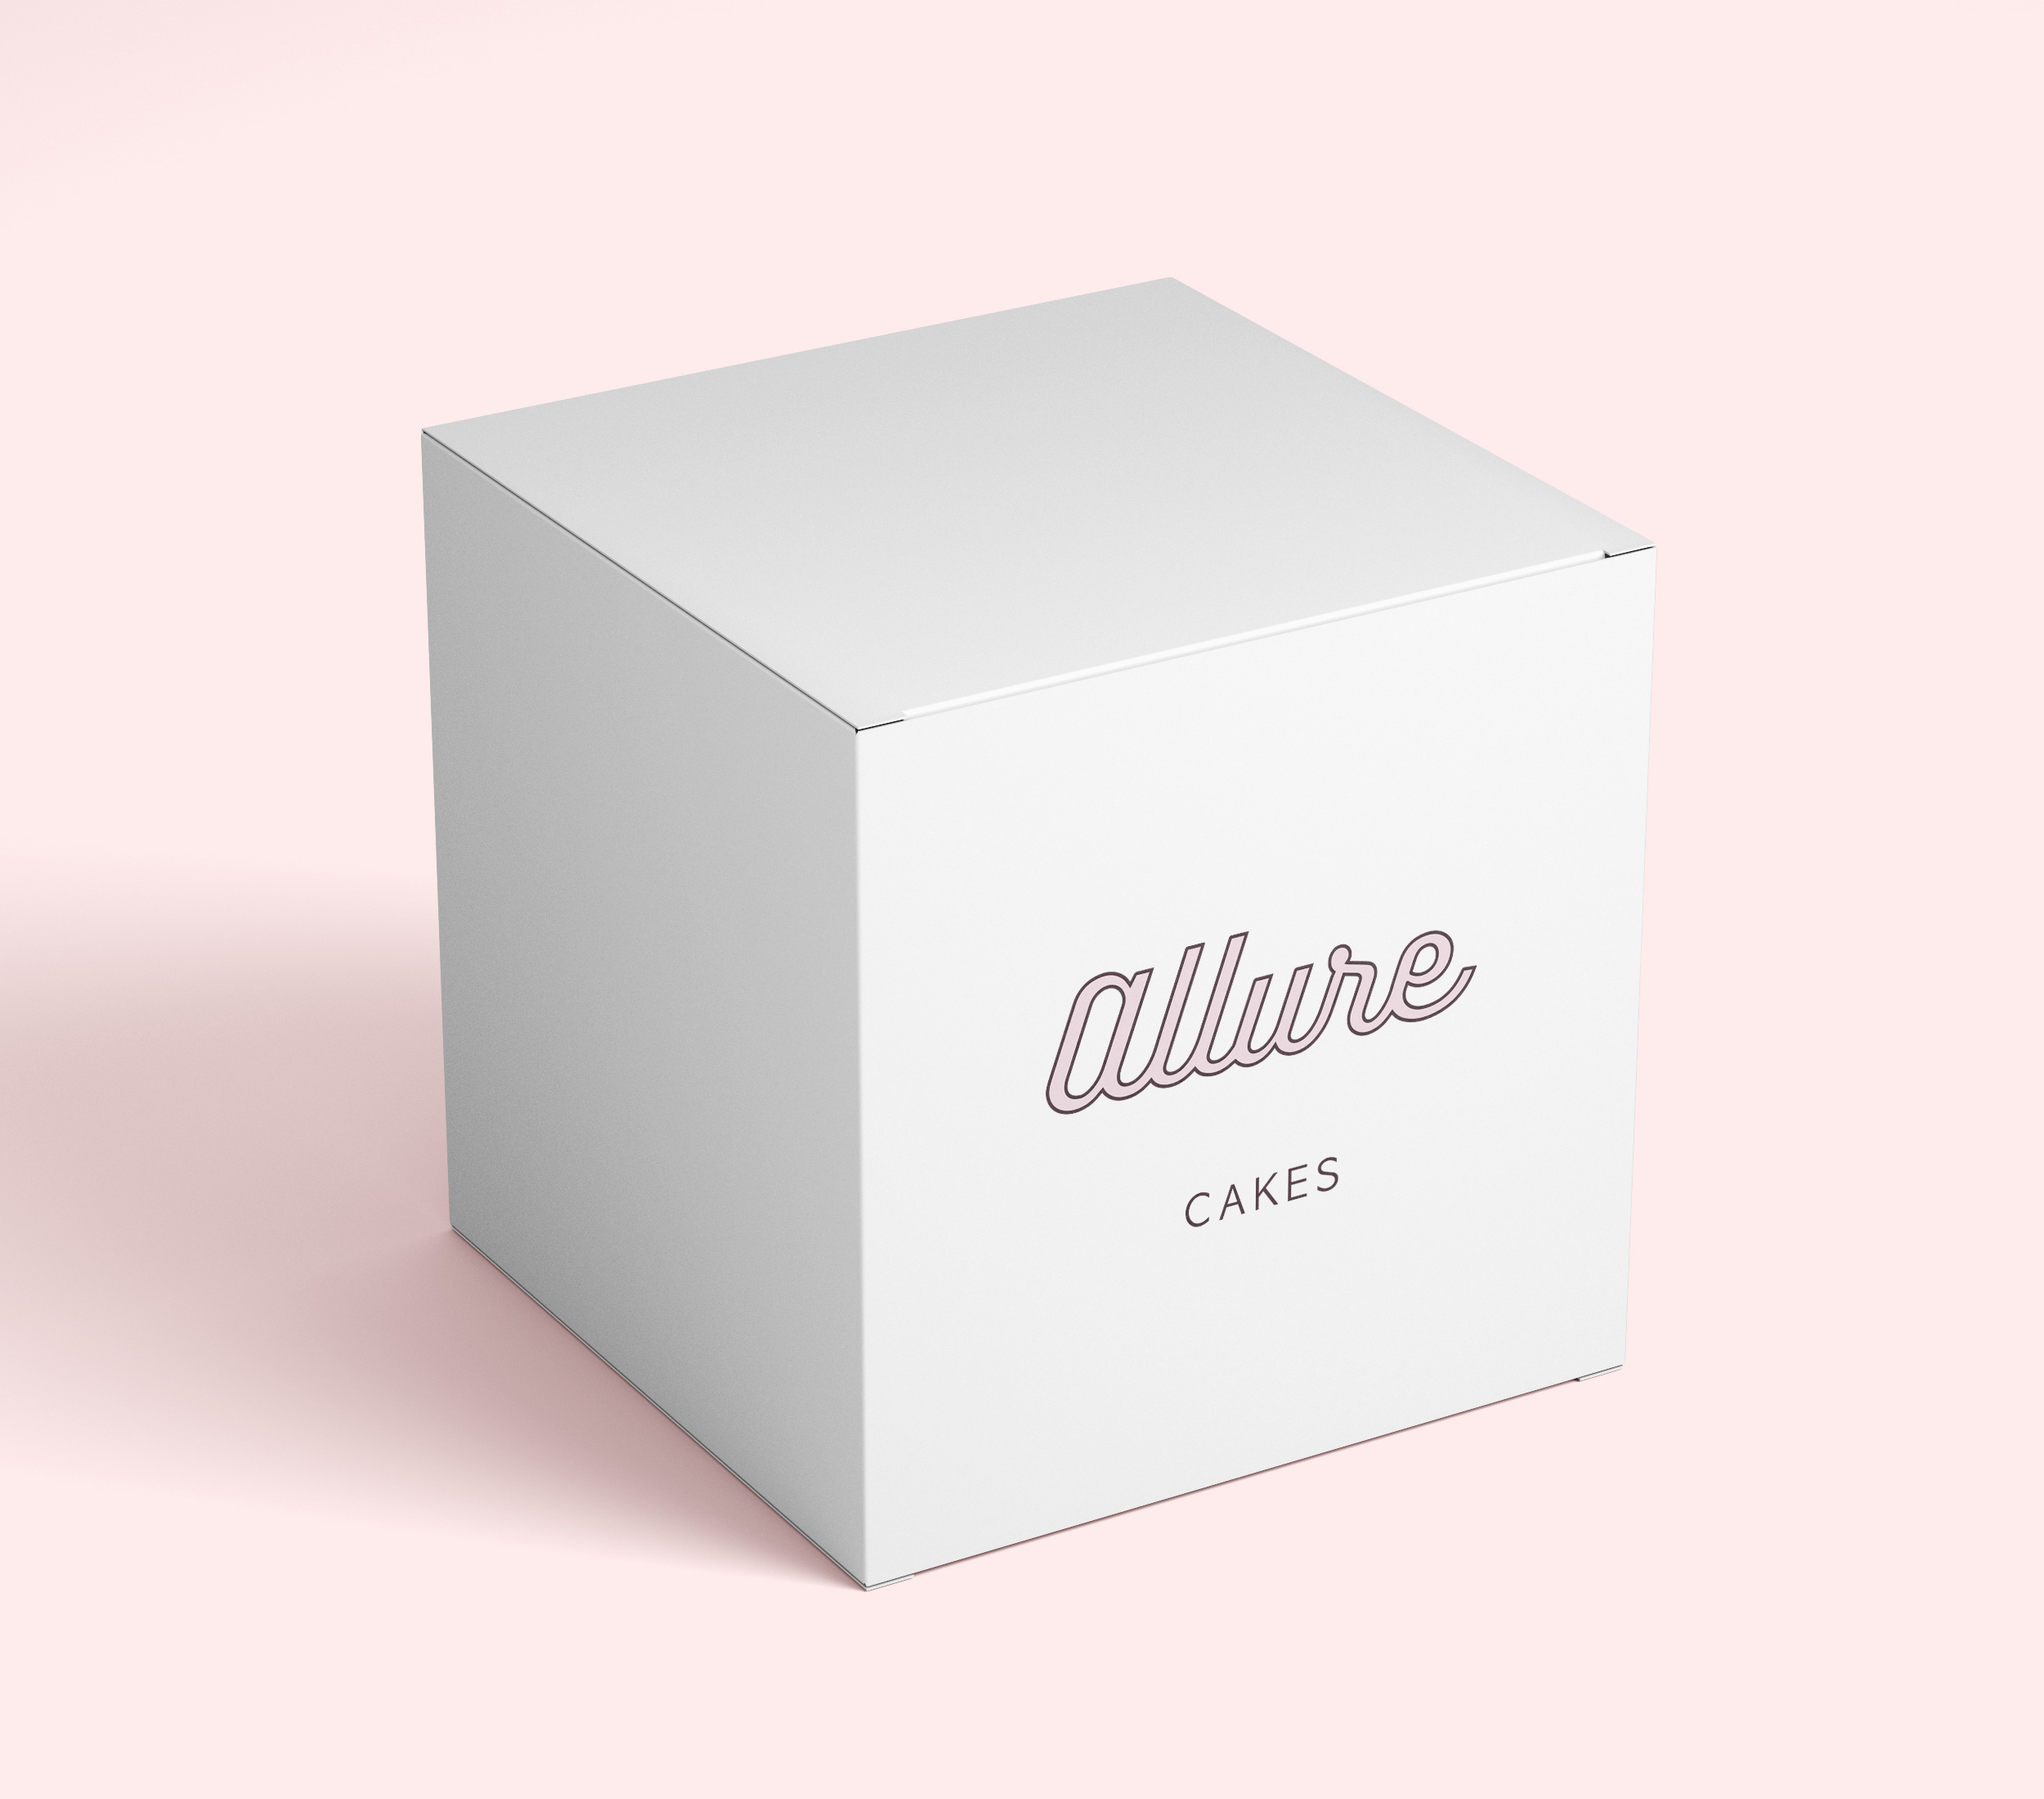 Wein & Co. Creative ALLURE CAKE & ART